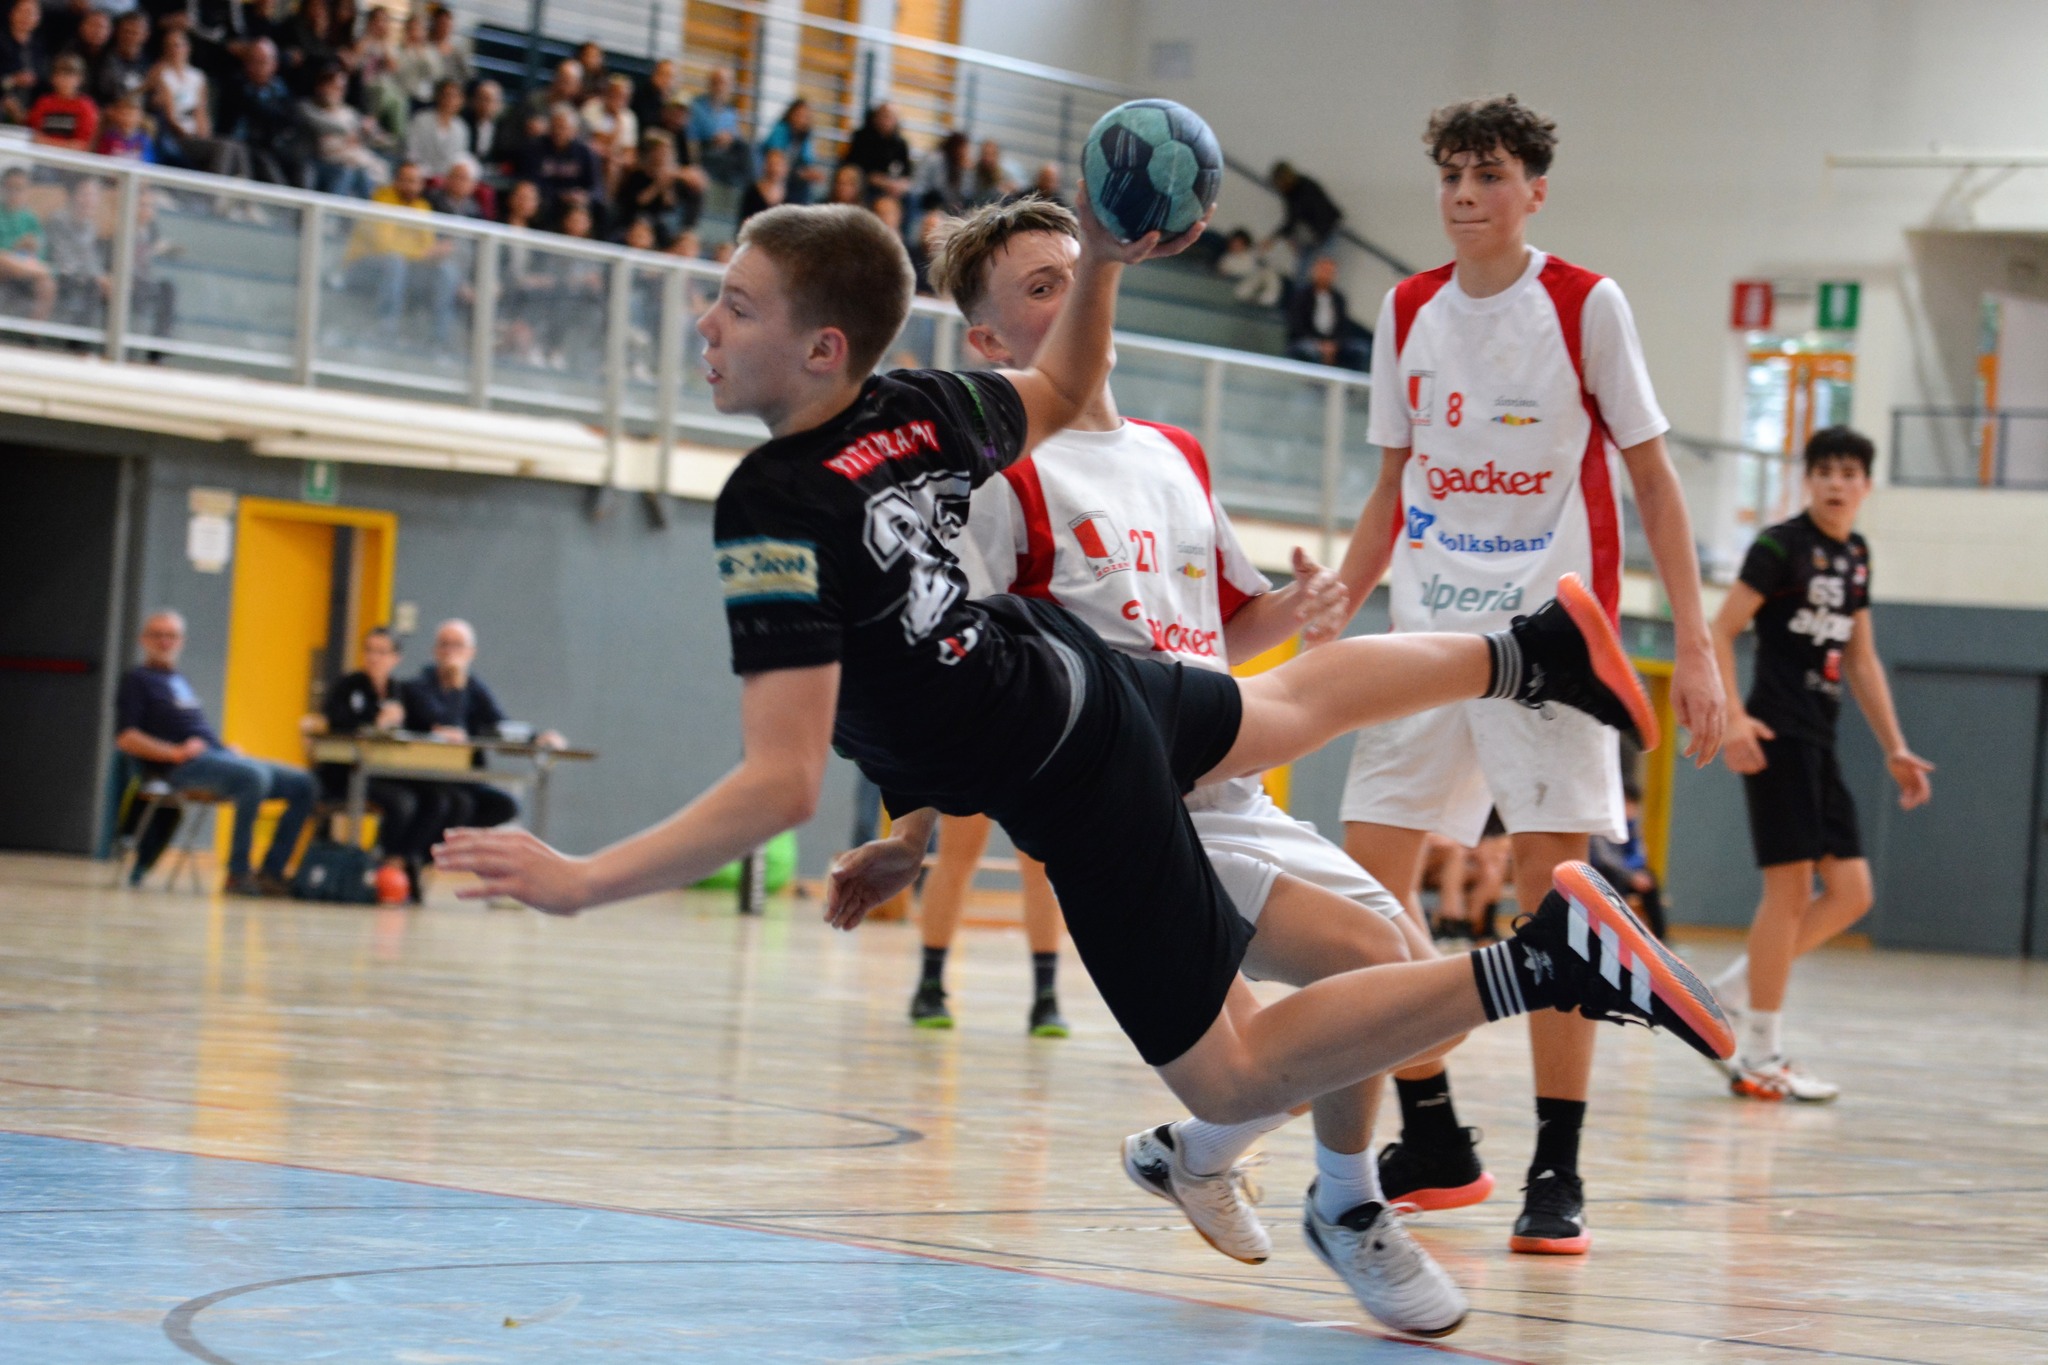 images/2023/meran-handball-u15-2023.jpeg#joomlaImage://local-images/2023/meran-handball-u15-2023.jpeg?width=2048&height=1365